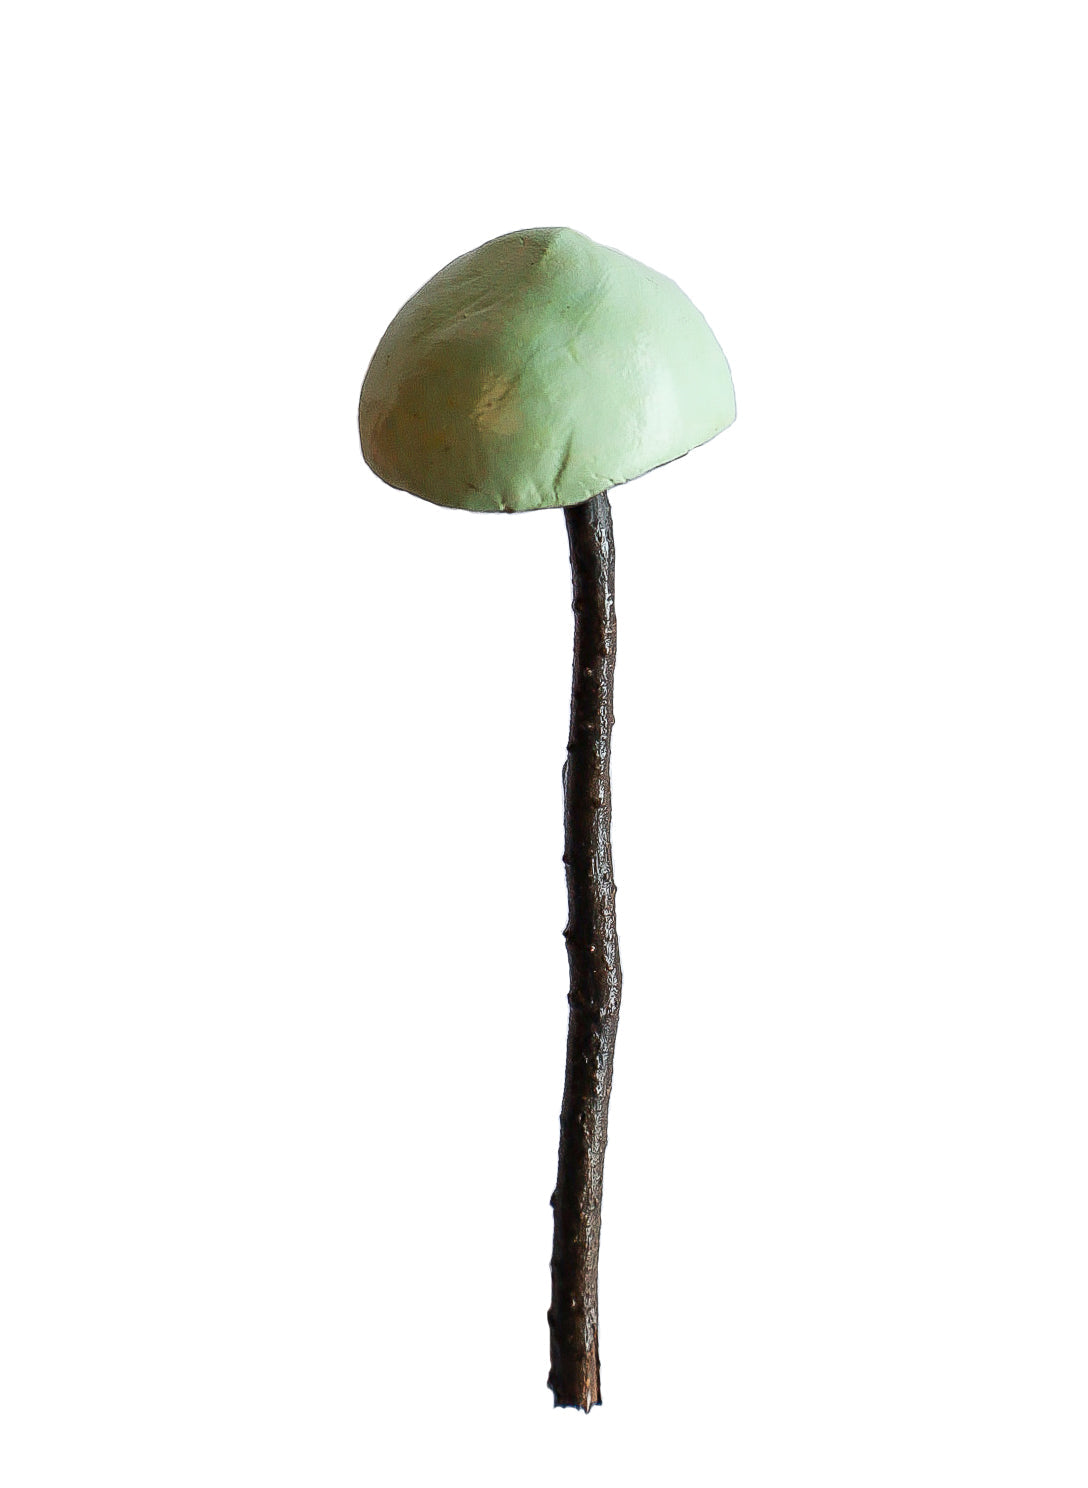 clay and wood mushroom sculpture 10 by Emma Lee Fleury